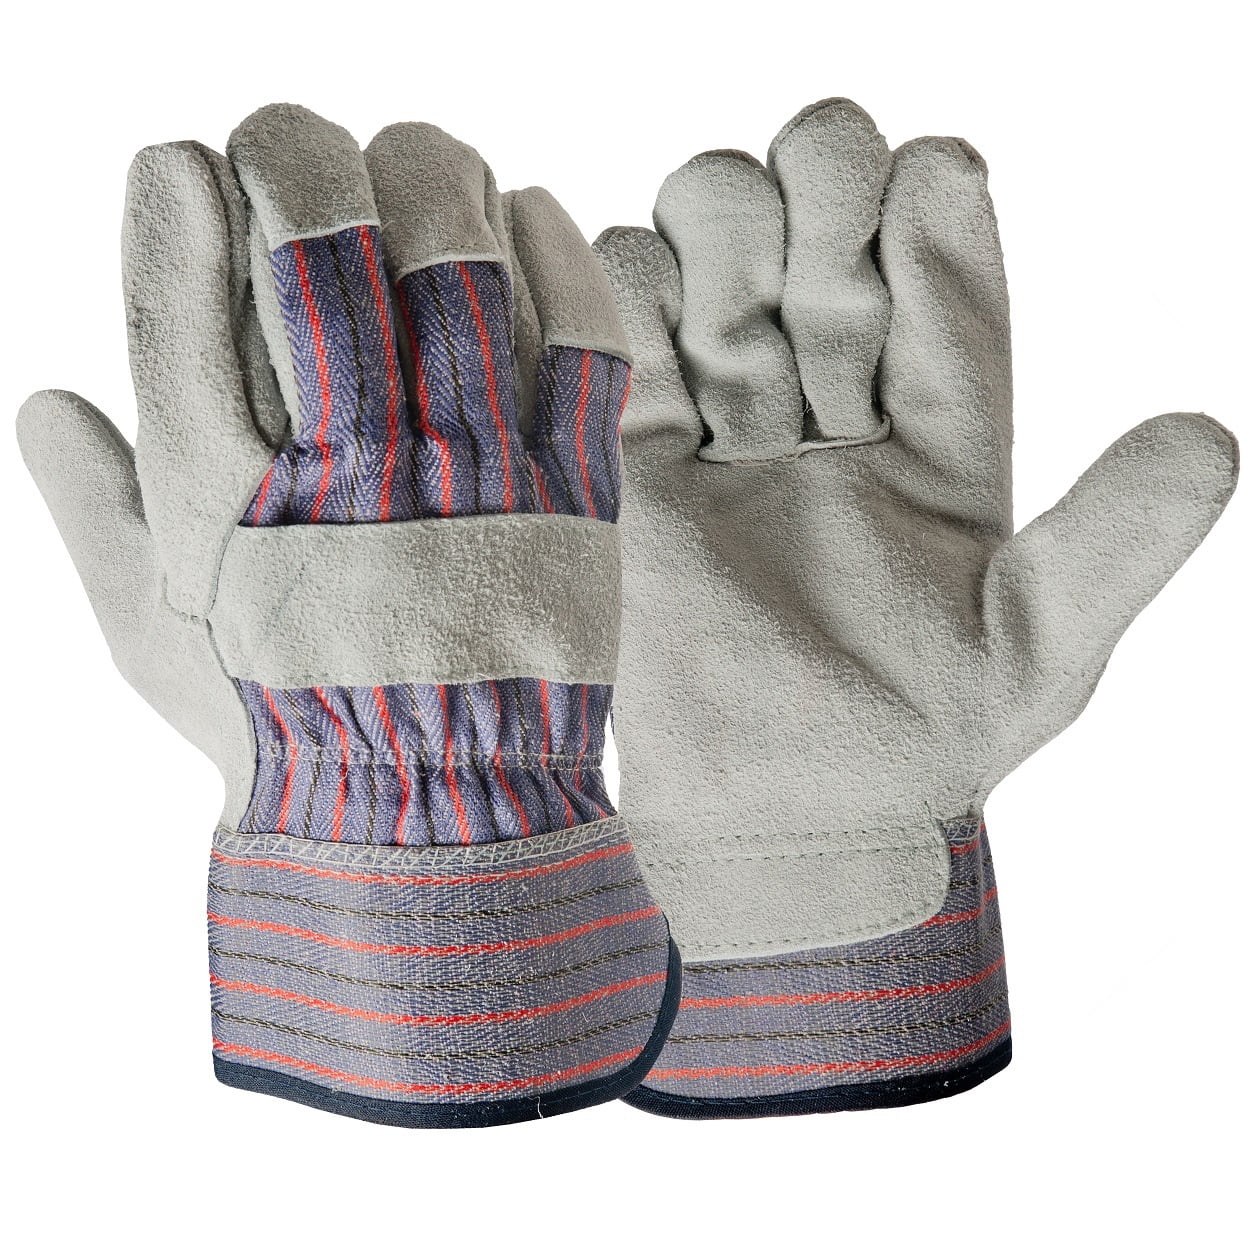 Hyper Tough 67402-26 Leather Palm Glove, Large, Multi-Use Work Glove